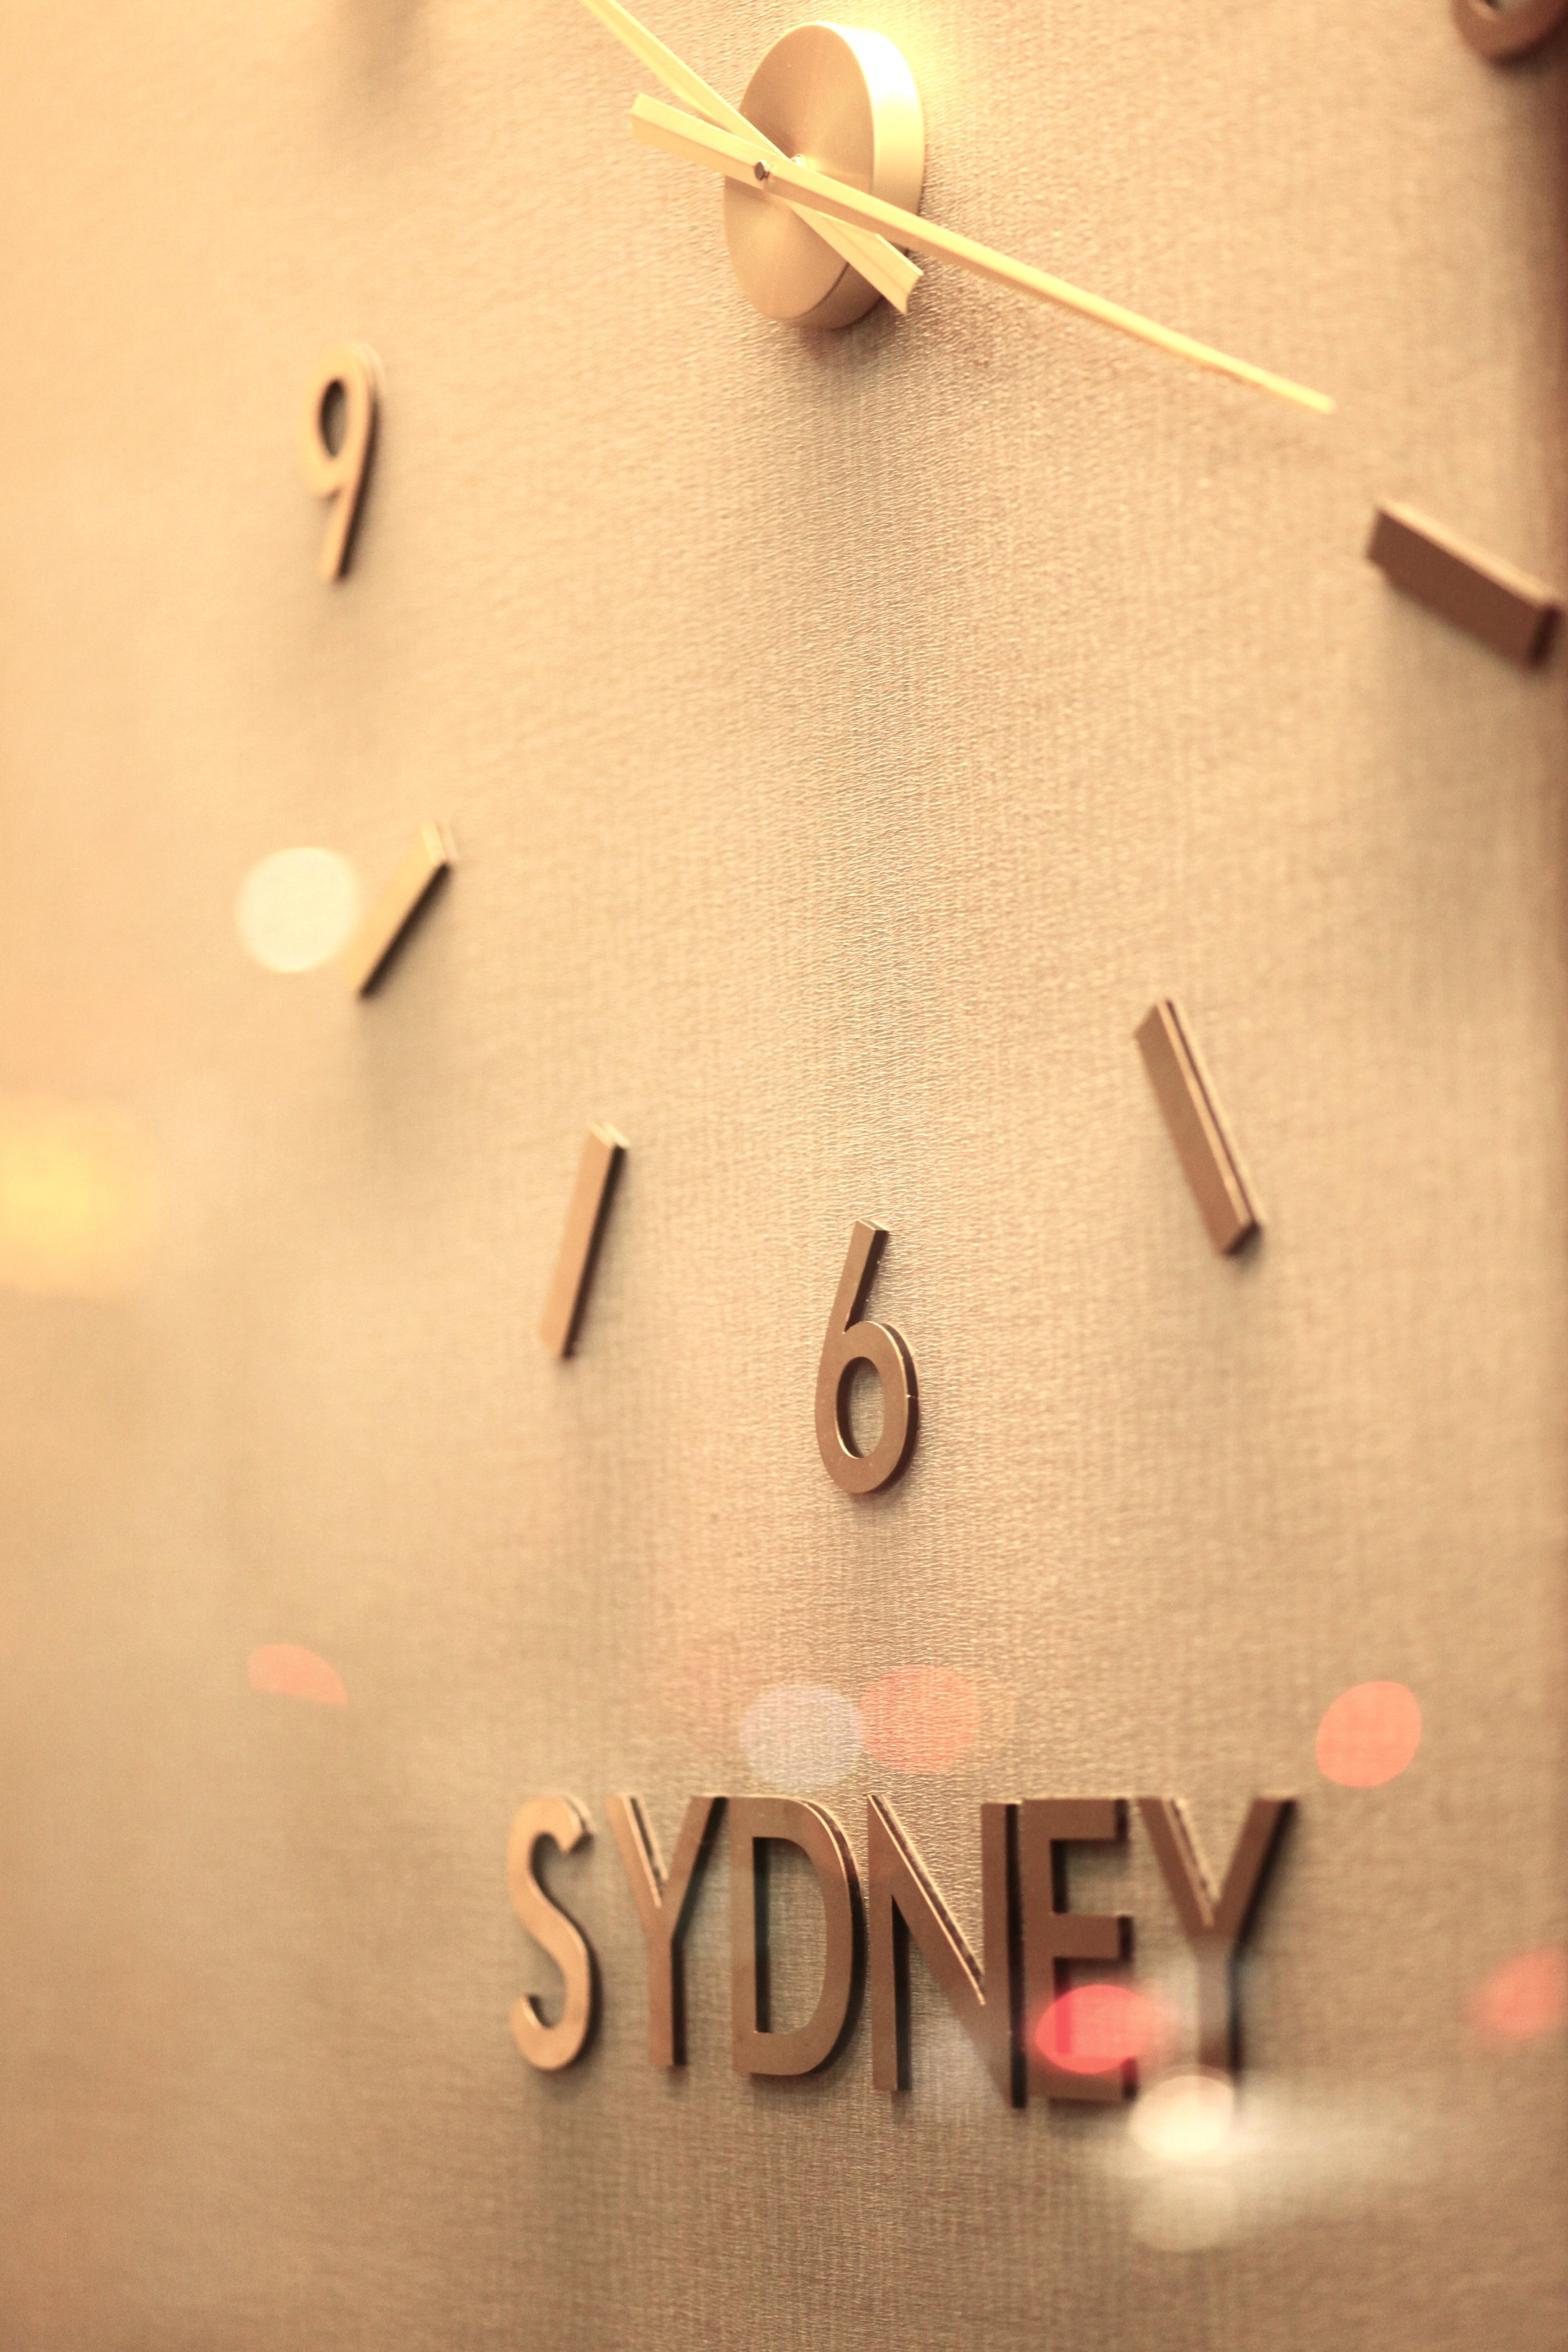 Clock Strikes Midnight - Set of Three Photography Prints - Sydney New Year's Eve Fireworks Artwork